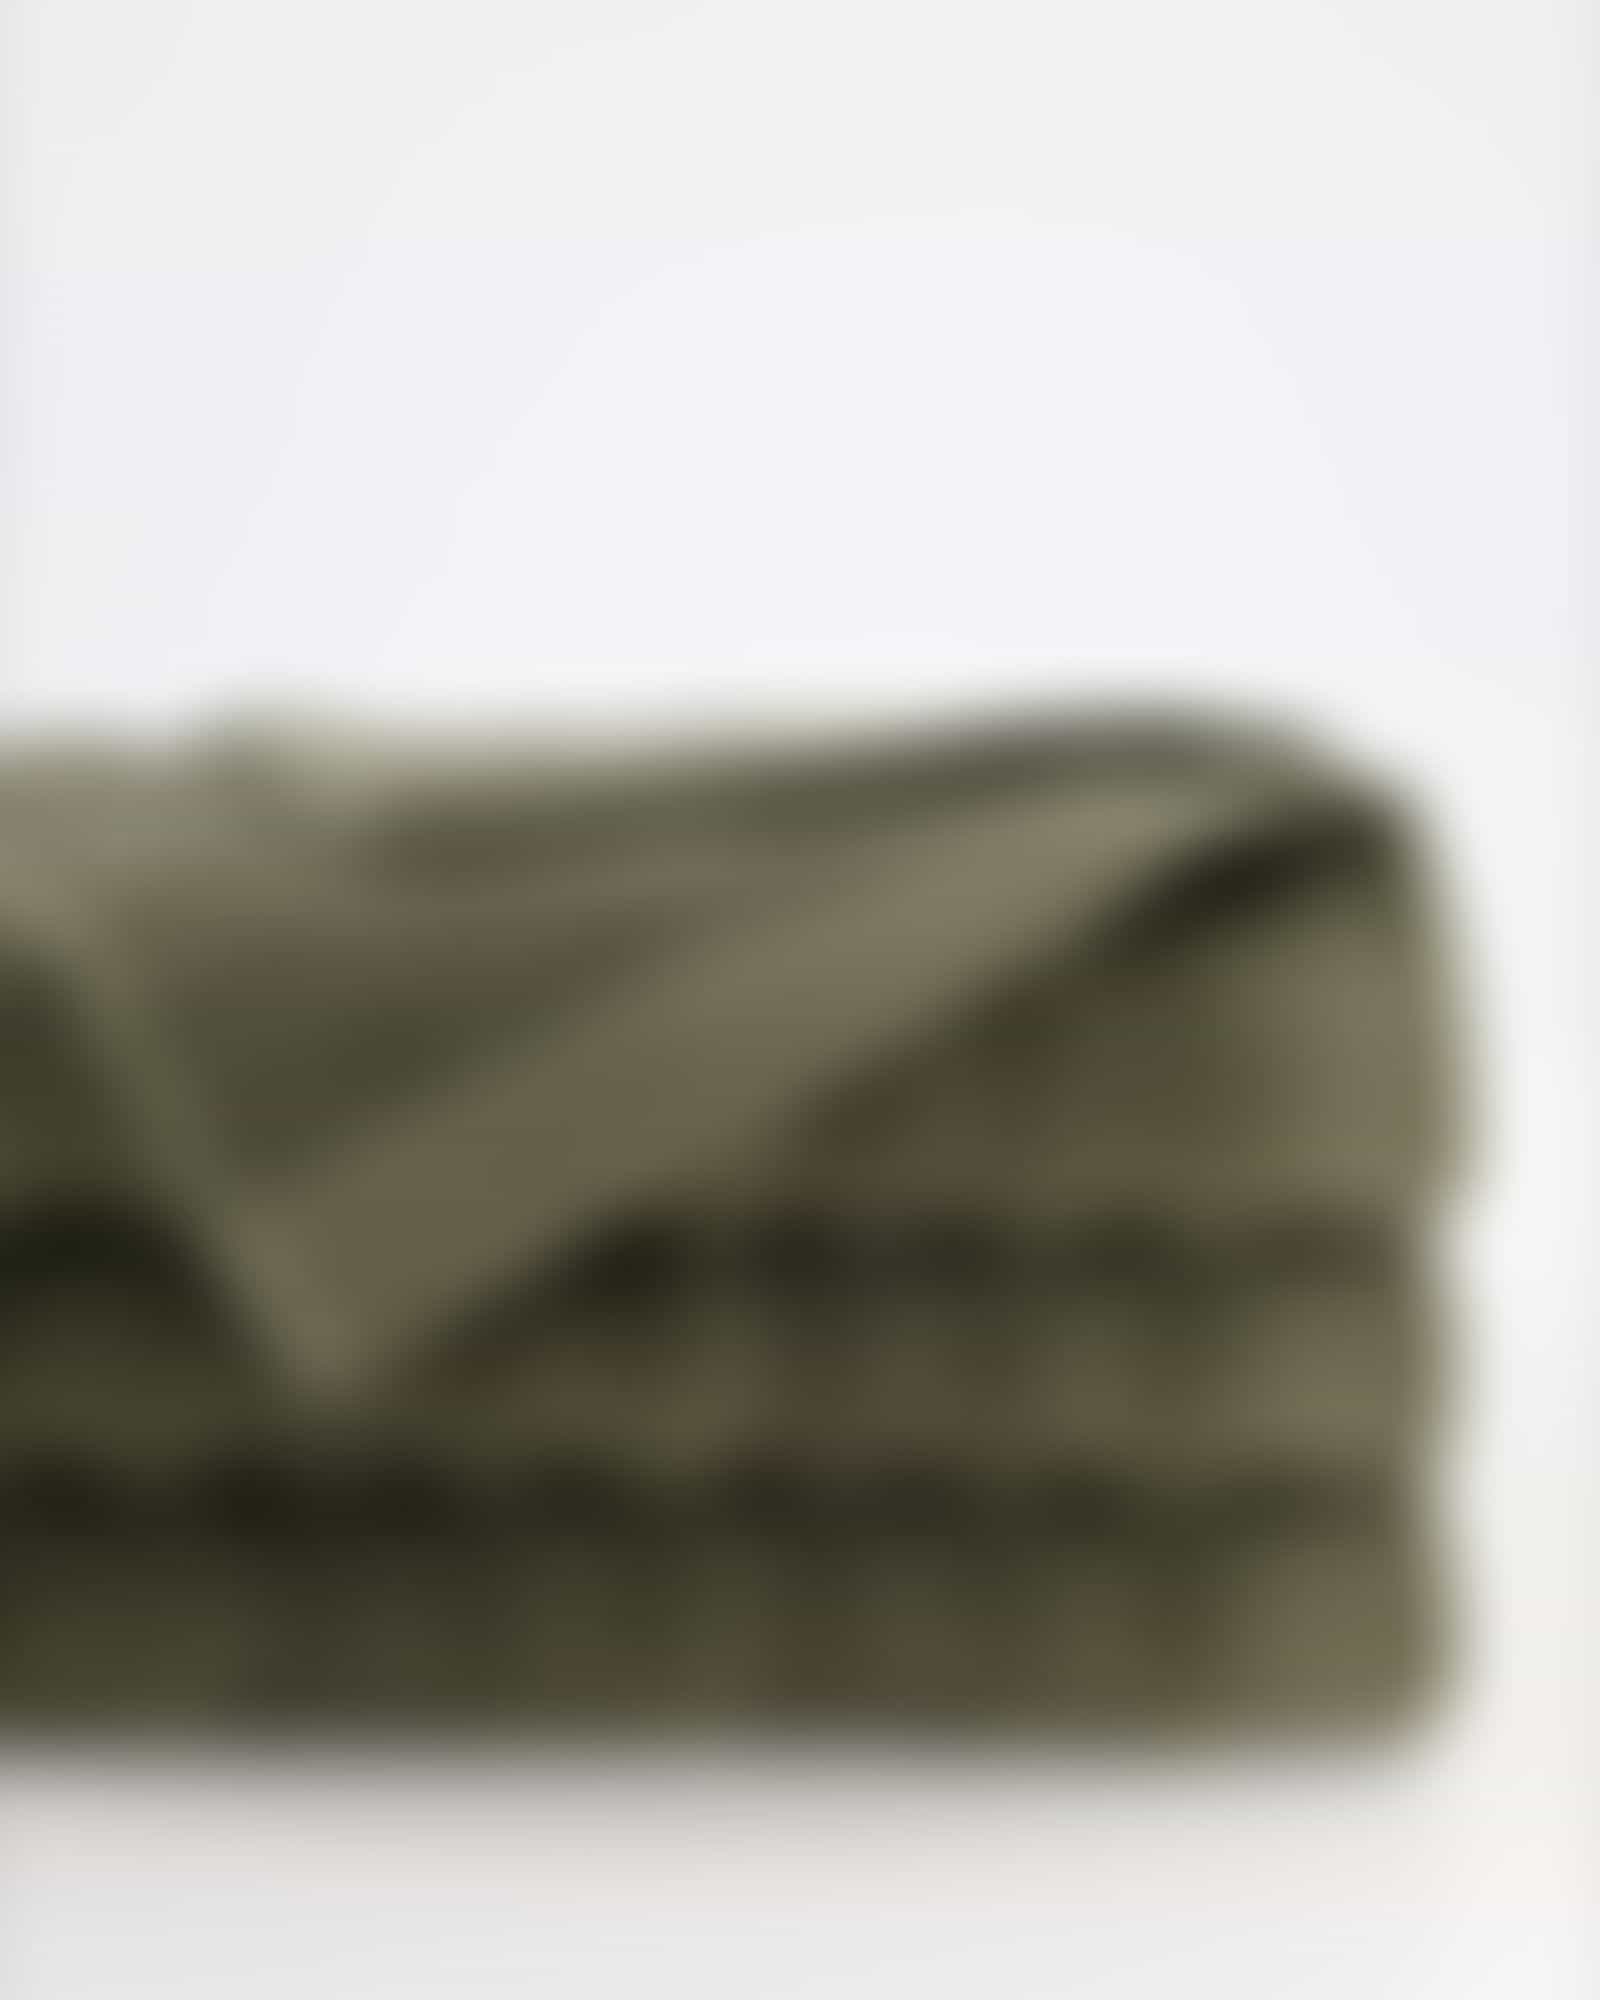 Möve Handtücher Wellbeing Wellenstruktur - Farbe: sea grass - 677 - Handtuch 50x100 cm Detailbild 2